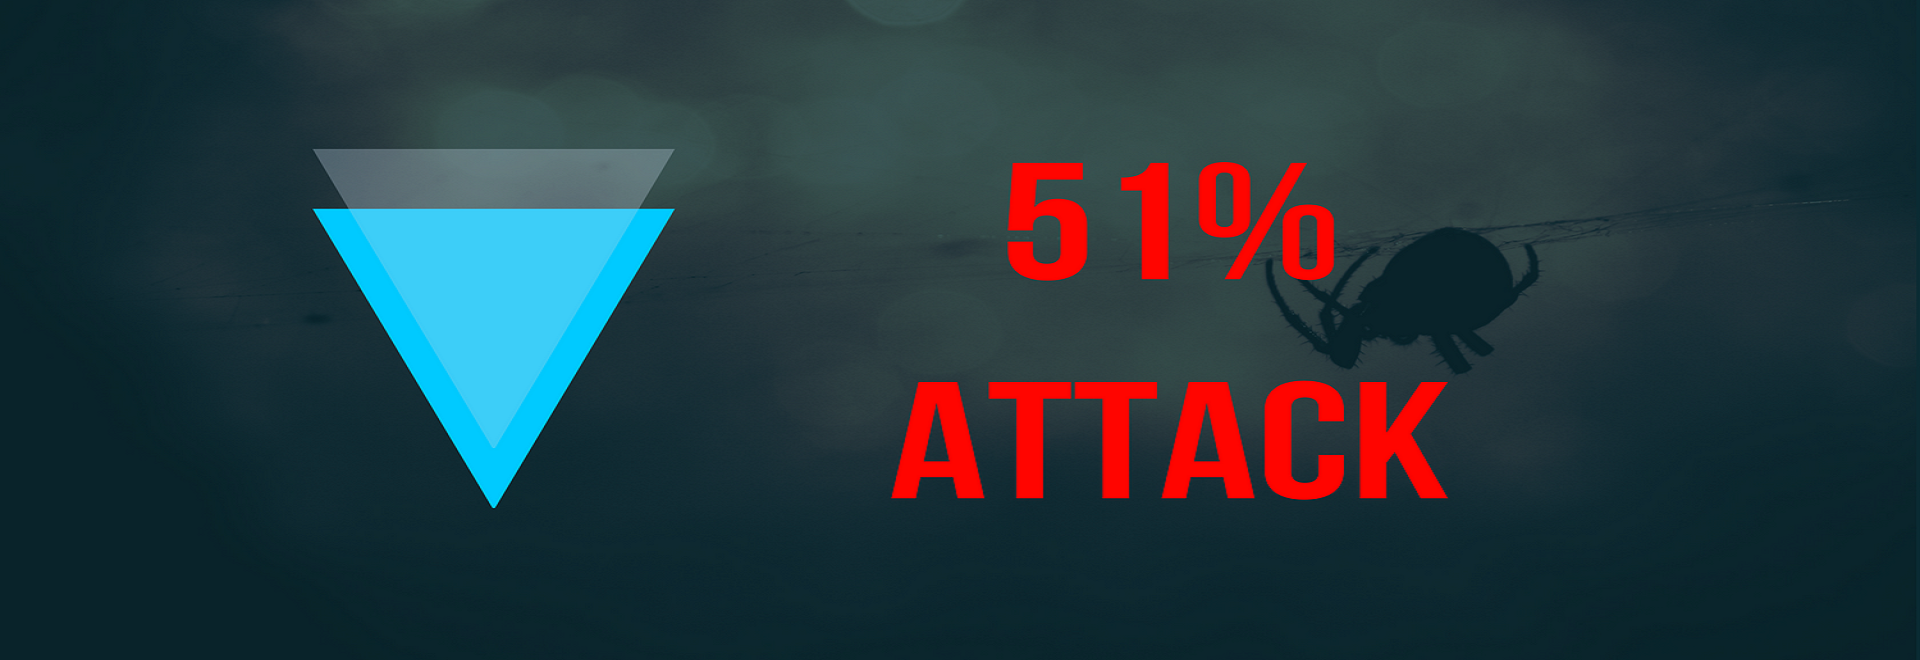 VergeXVGAttack - نحوه کارکرد حملات 51%